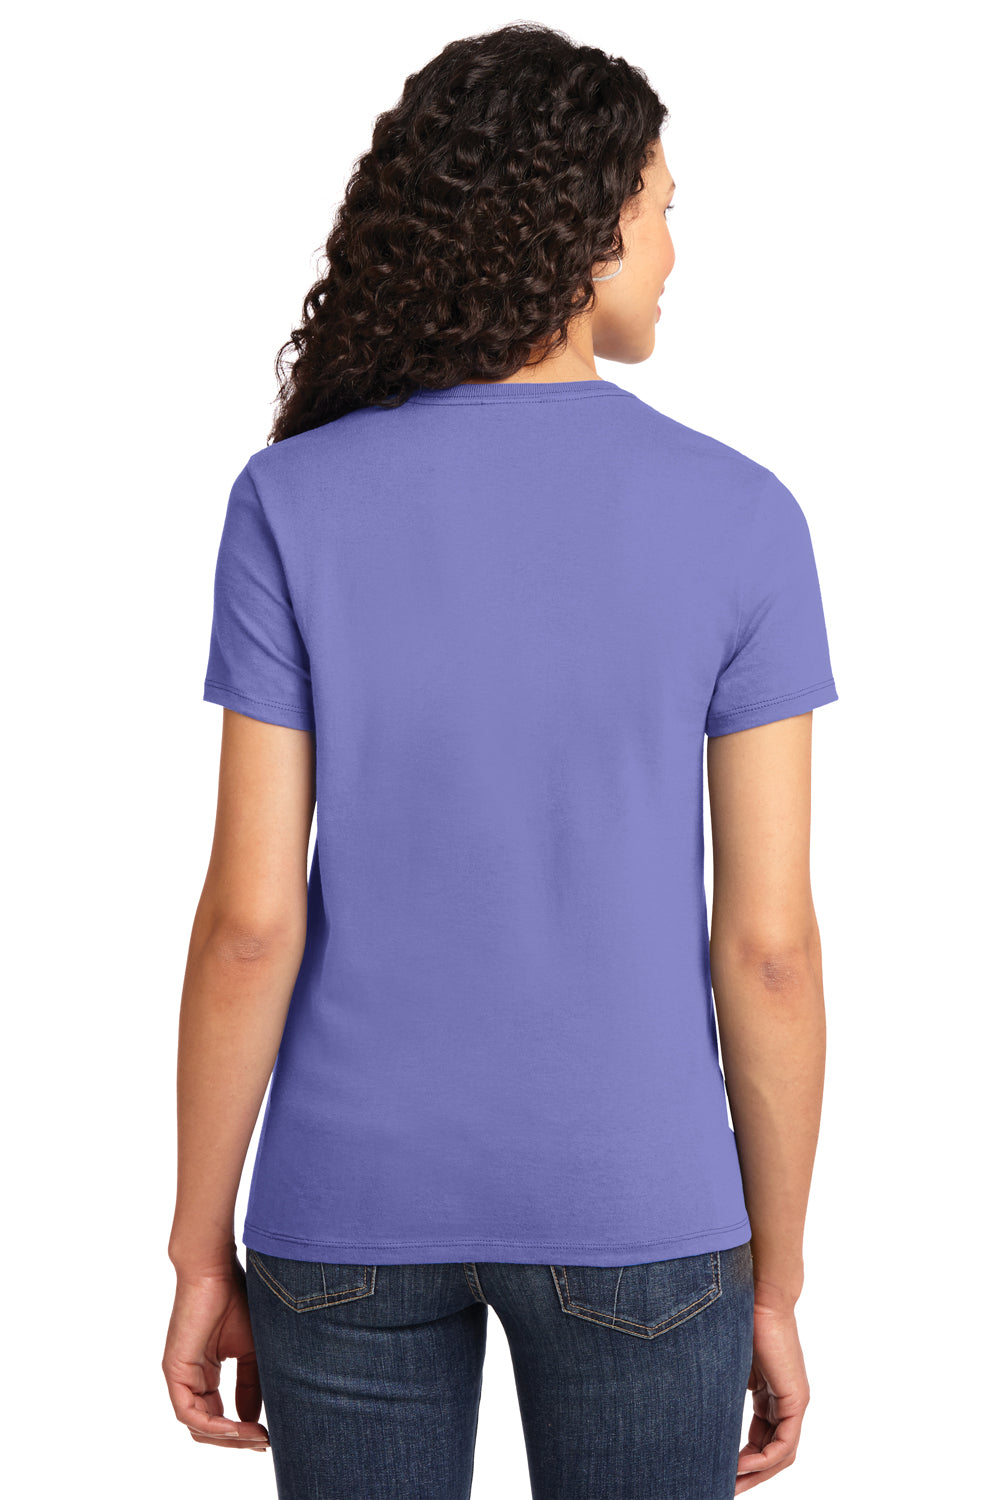 Port & Company LPC61 Womens Essential Short Sleeve Crewneck T-Shirt Violet Purple Back